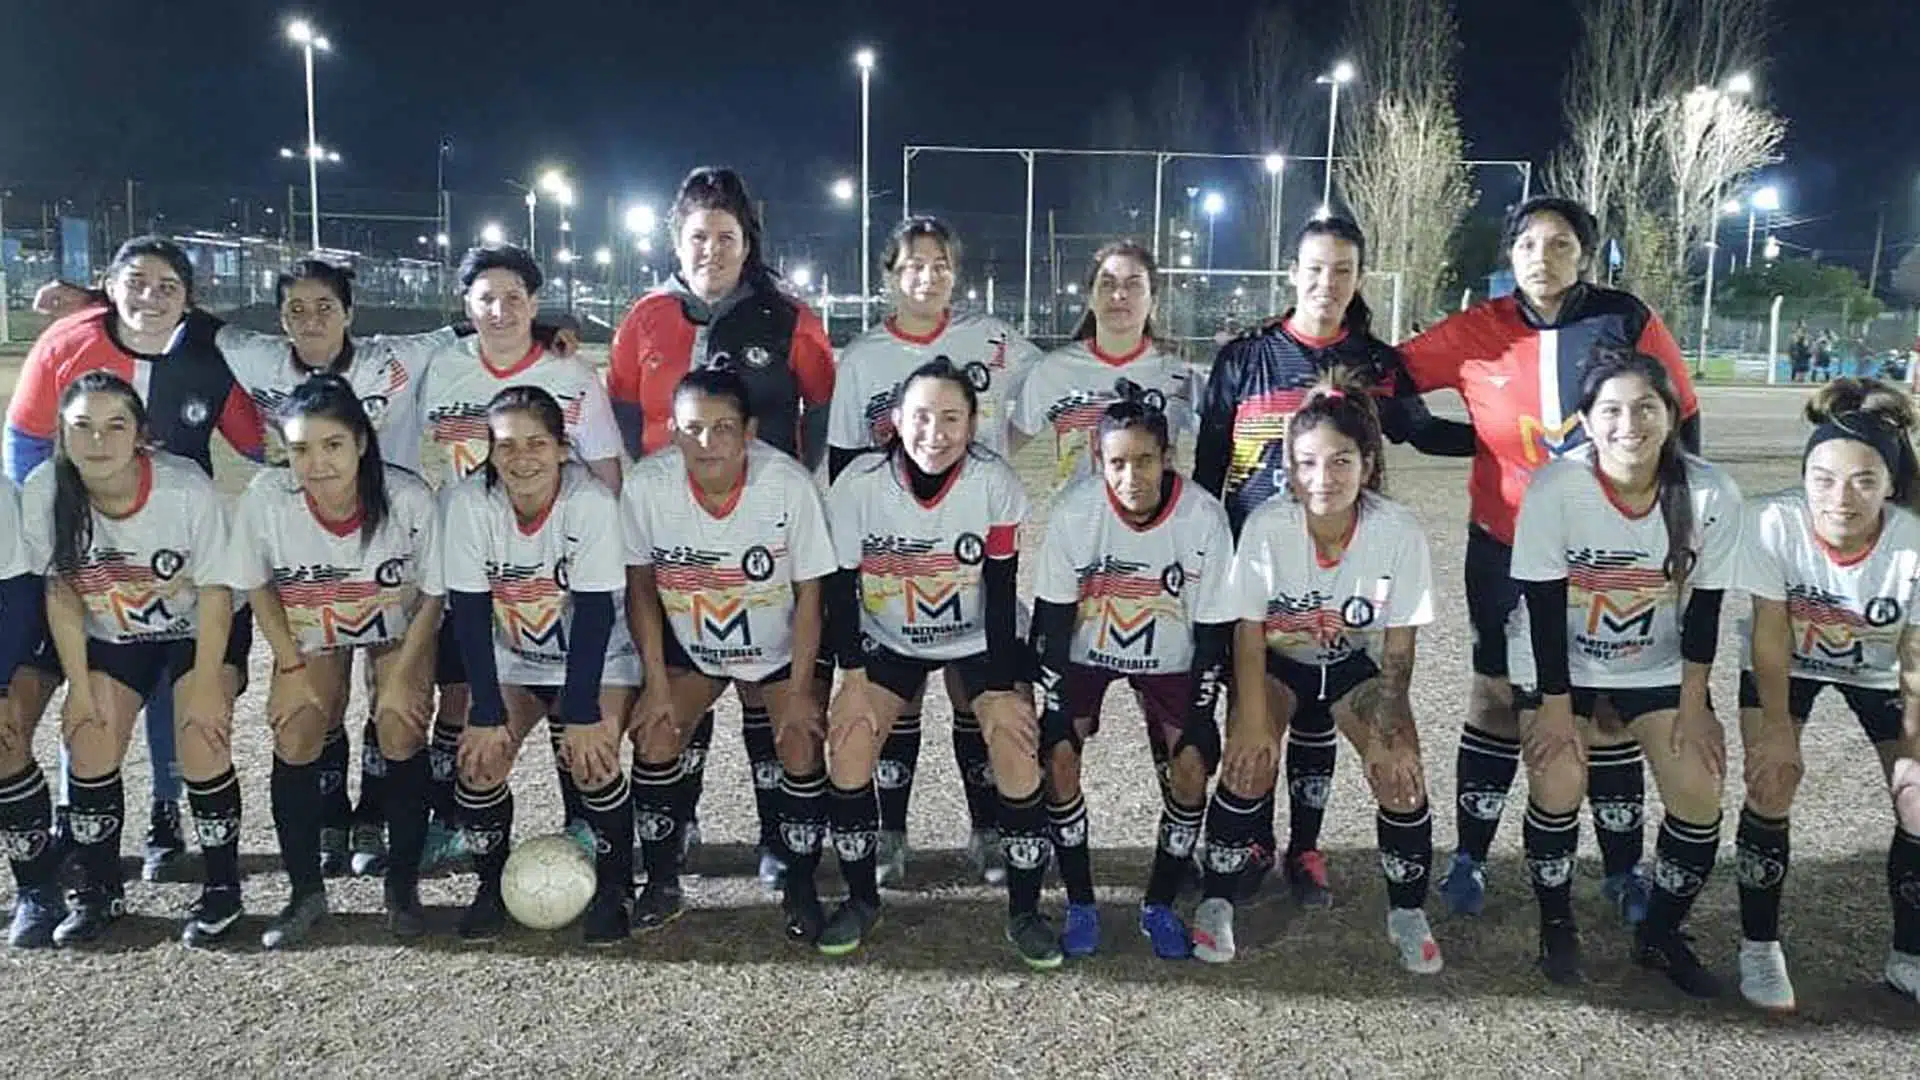 Liga Municipal de Fútbol Femenino